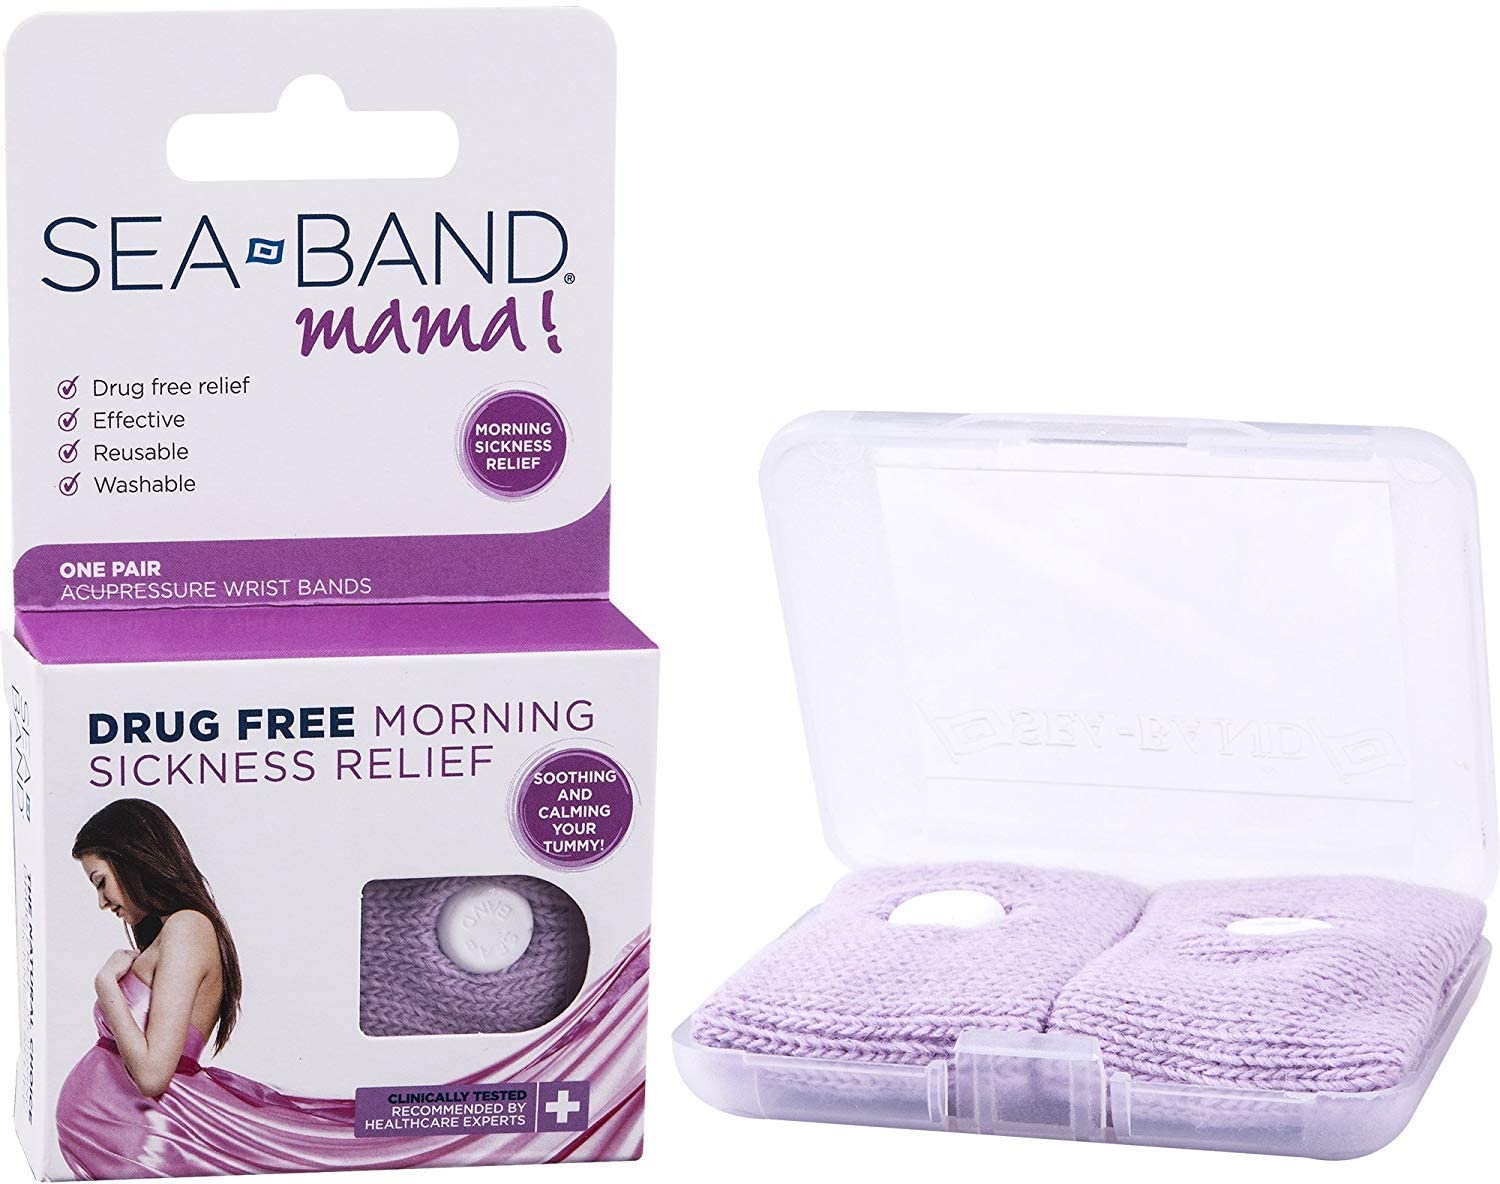 Sea-Band Mama Maternity Kit - Chống say xe ốm nghén cho phụ nữ mang thai